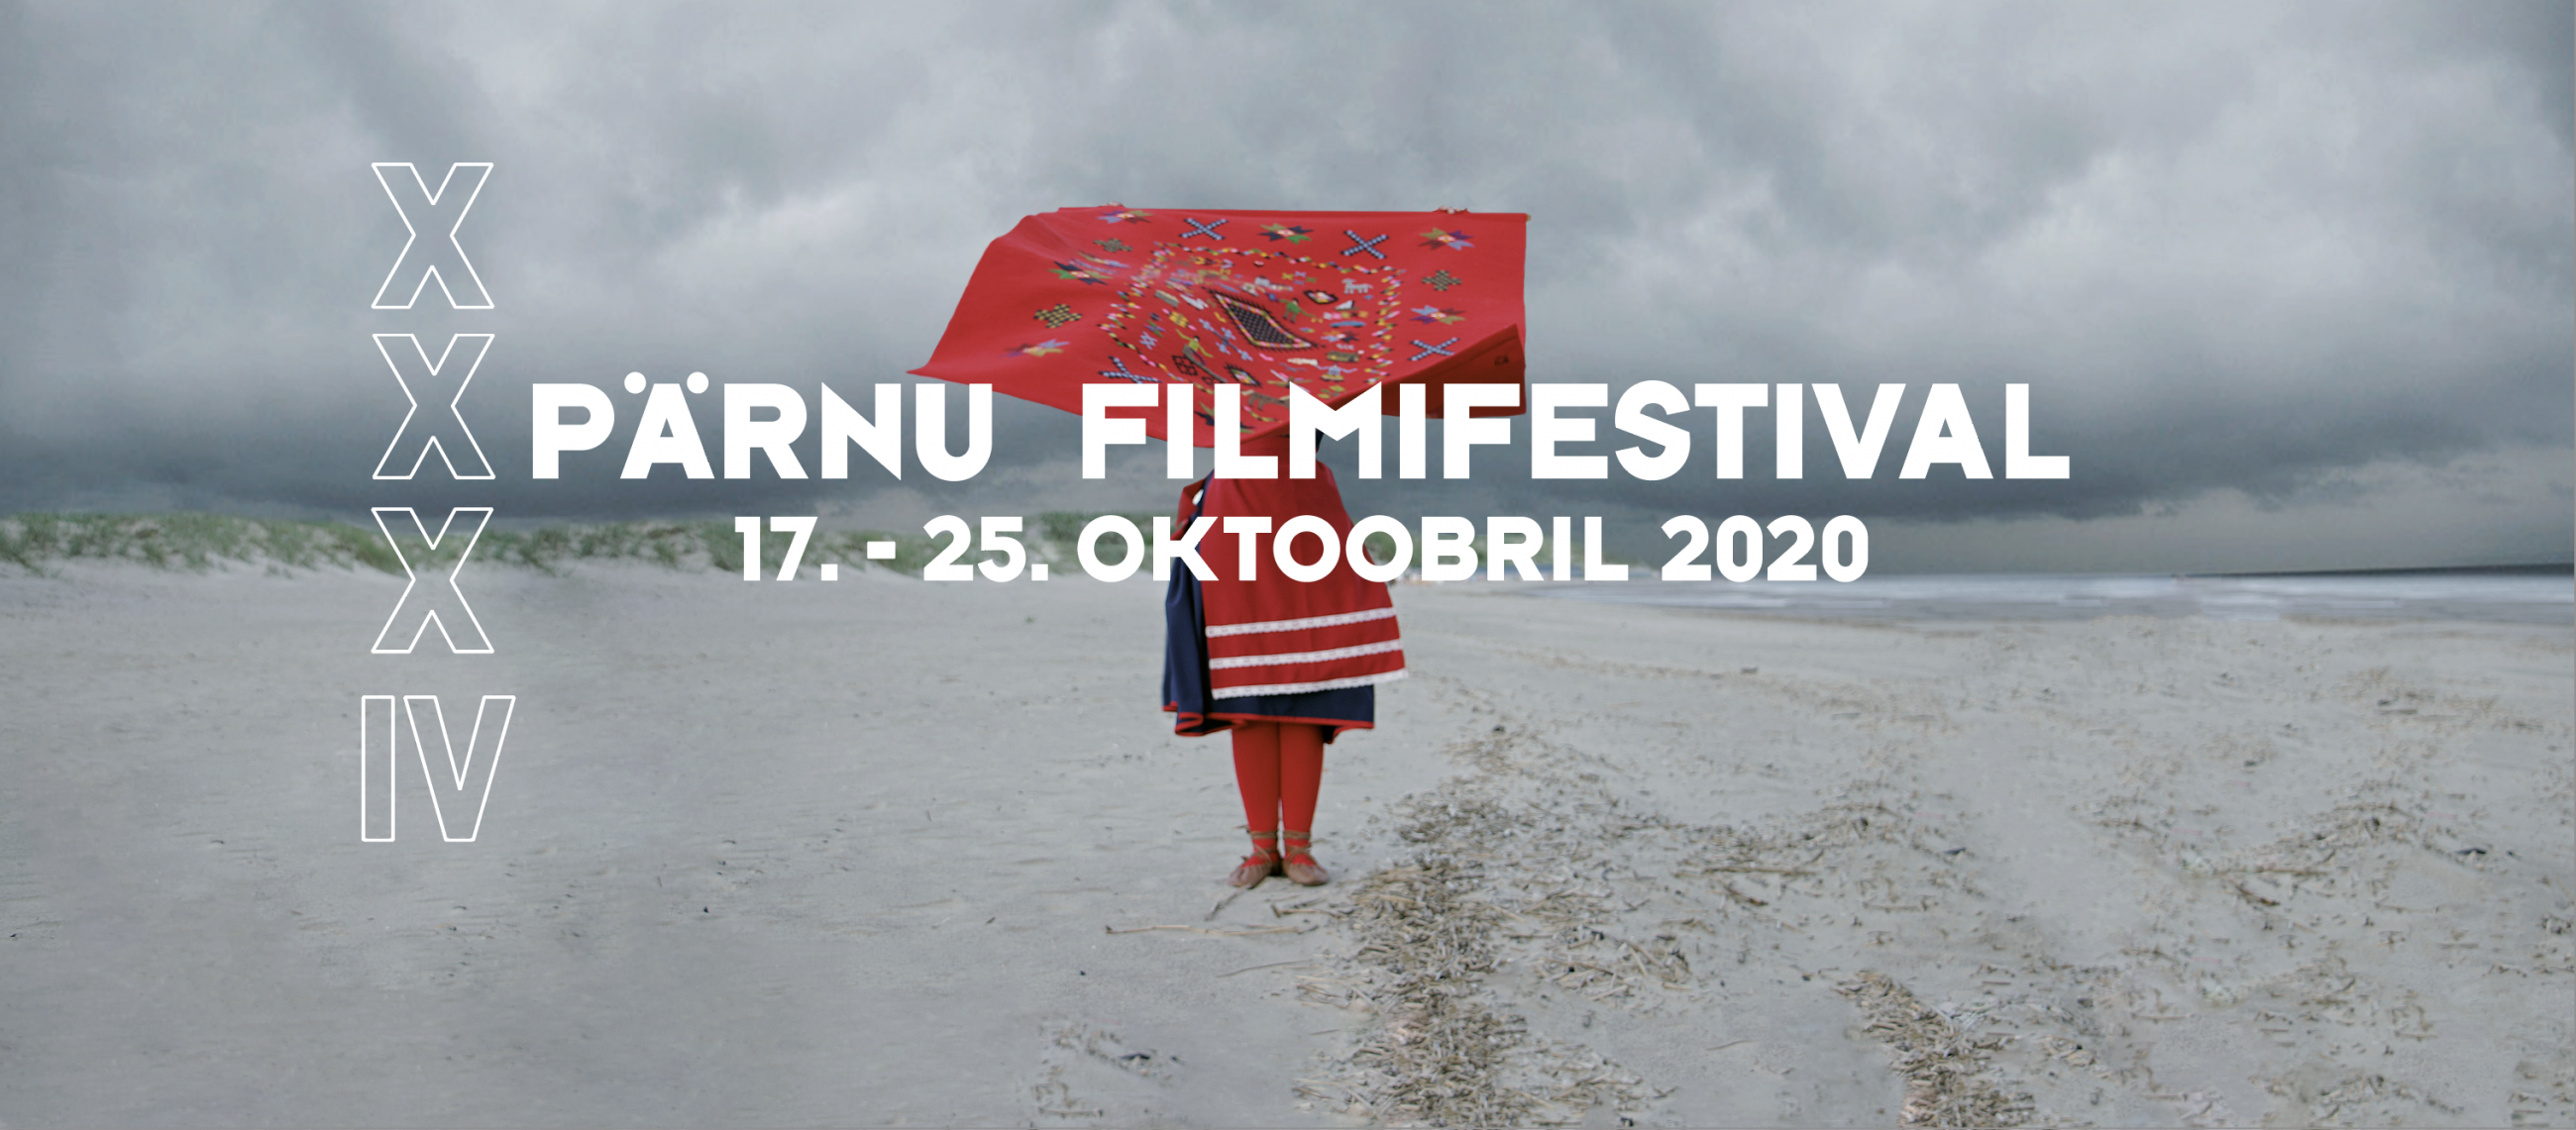 Pärnu filmifestival